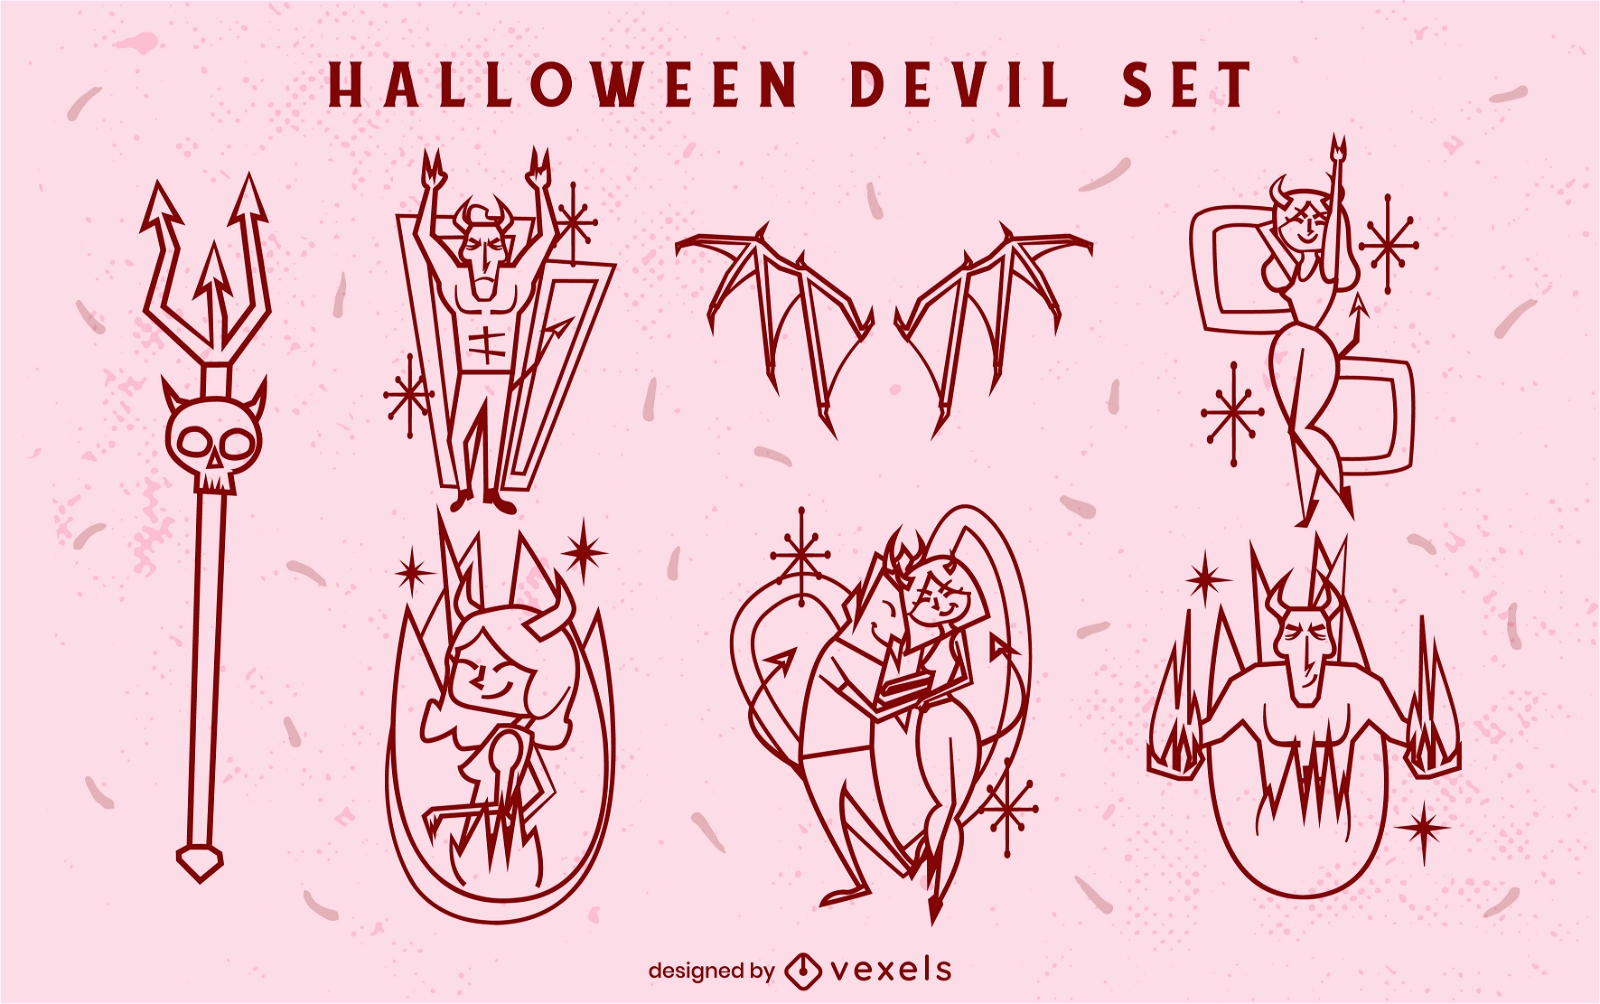 Conjunto de golpes de criaturas do inferno de diabos de Halloween